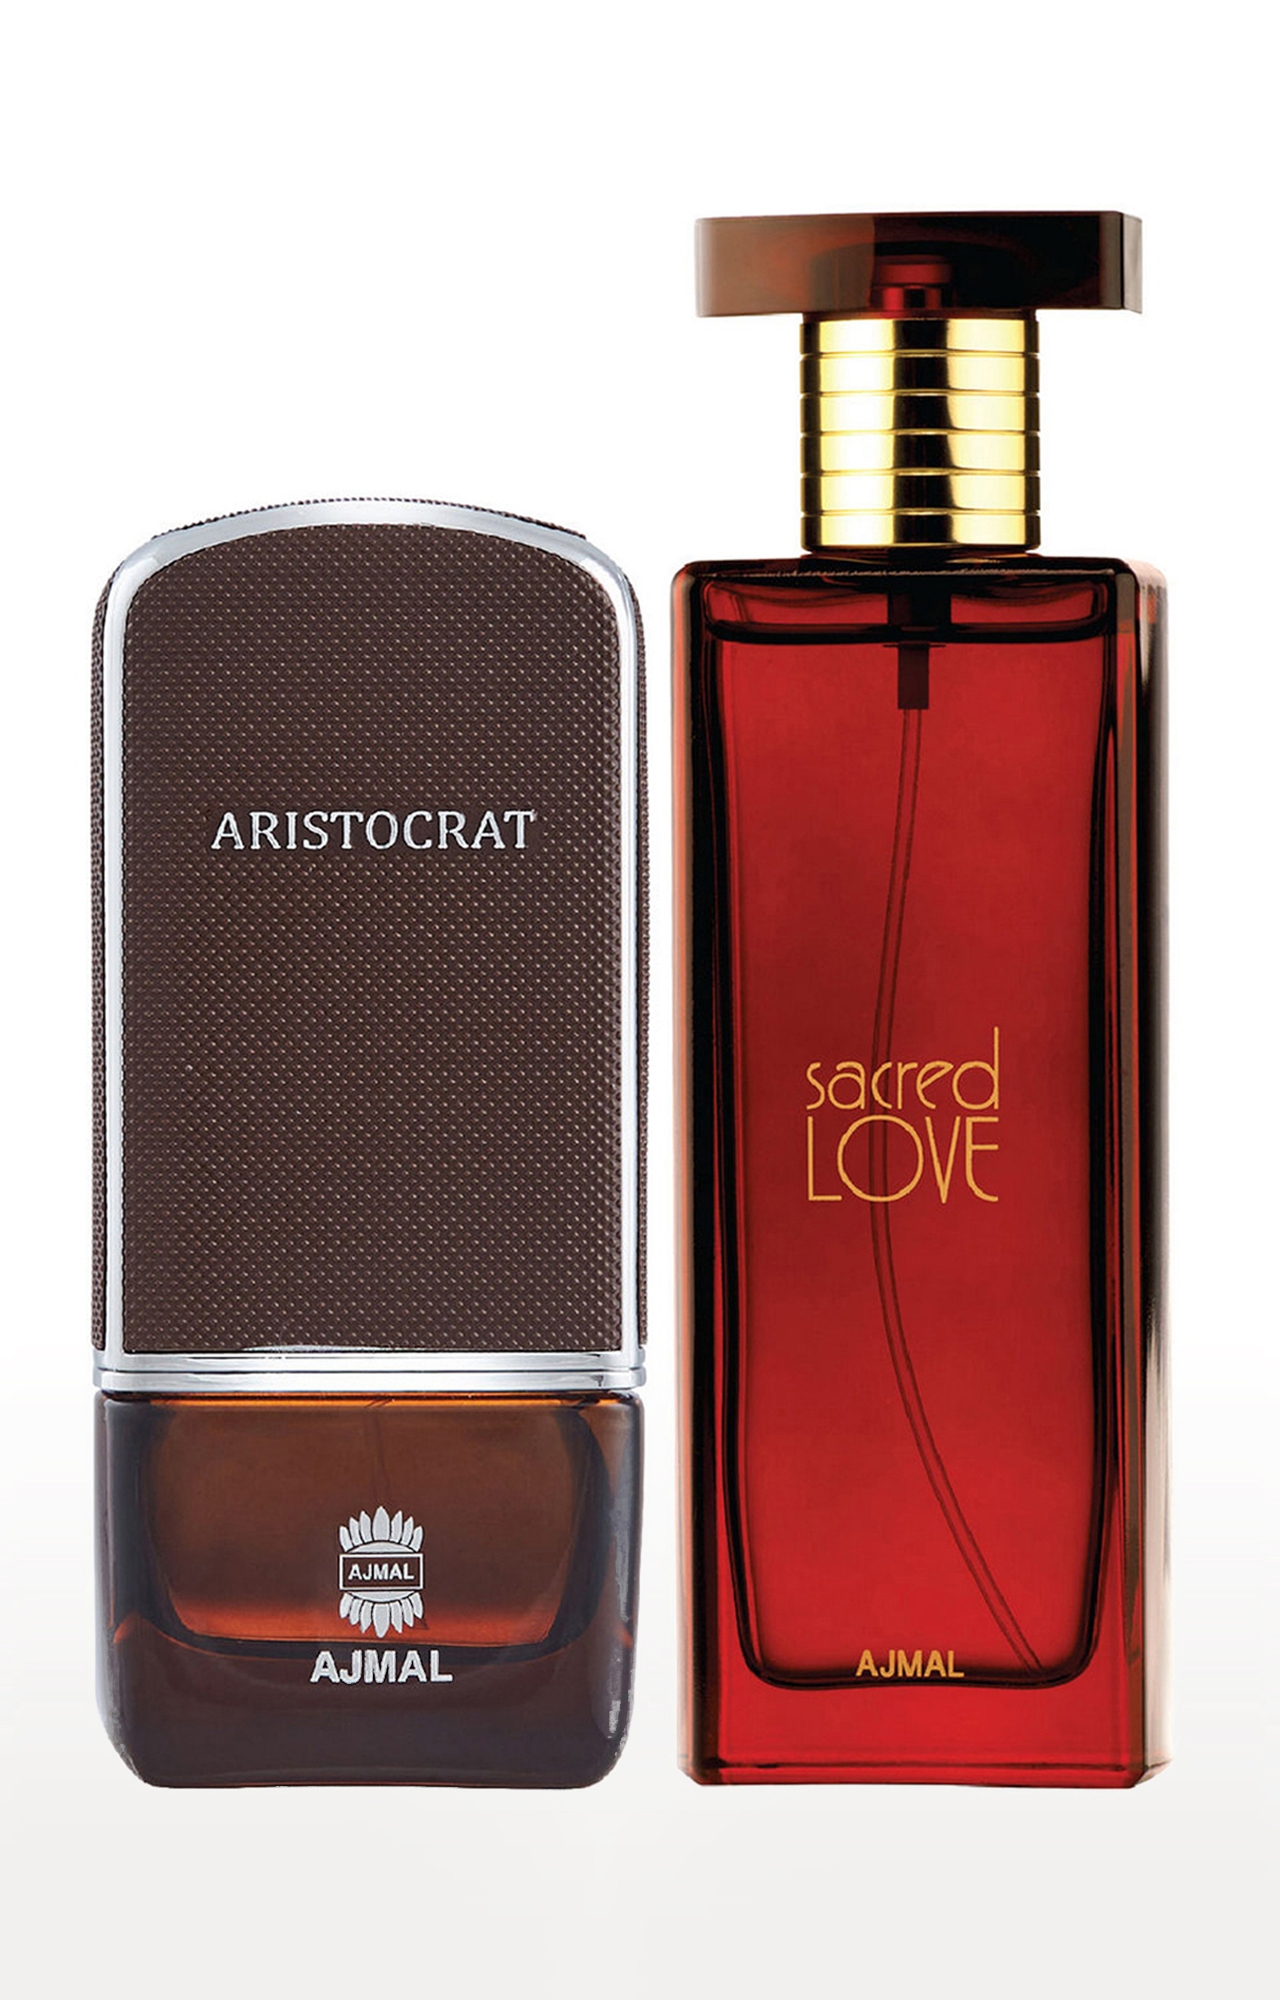 Ajmal Aristocrat EDP Perfume 75ml for Men and Sacred Love EDP Musky Perfume 50ml for Women